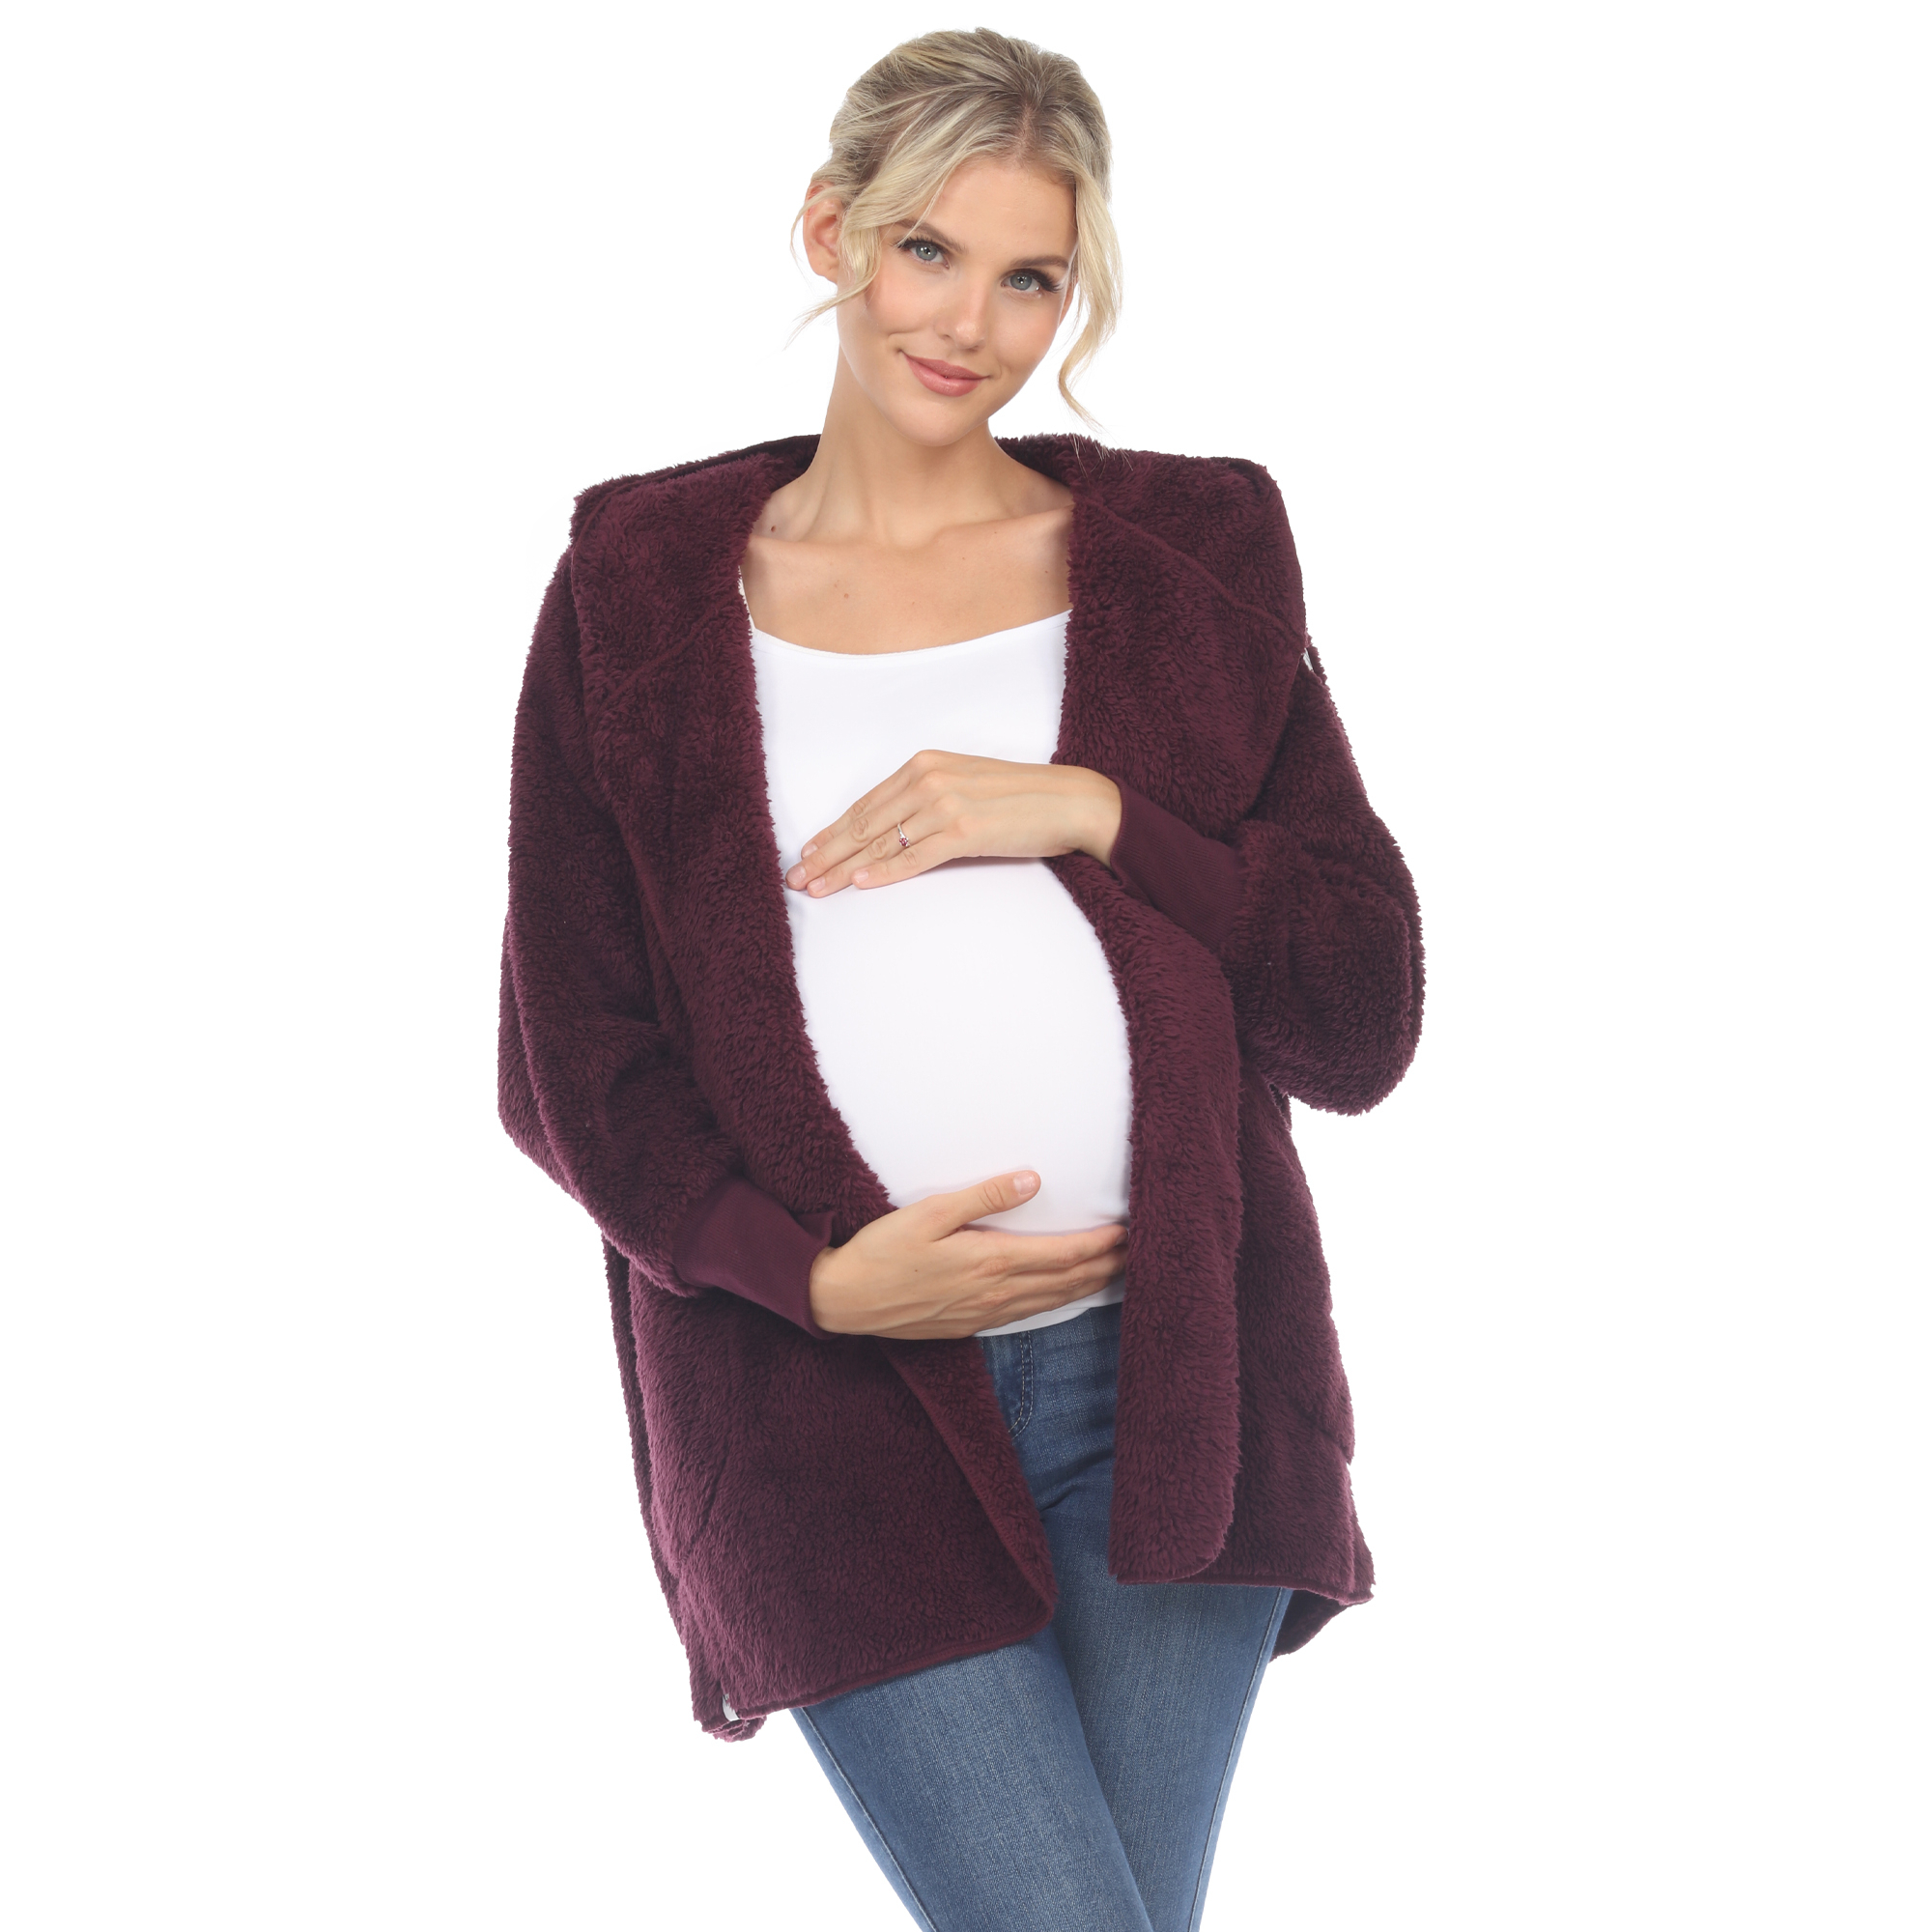 White Mark Womenâs Maternity Plush Hooded Cardigan With Pockets - Purple, L/XL